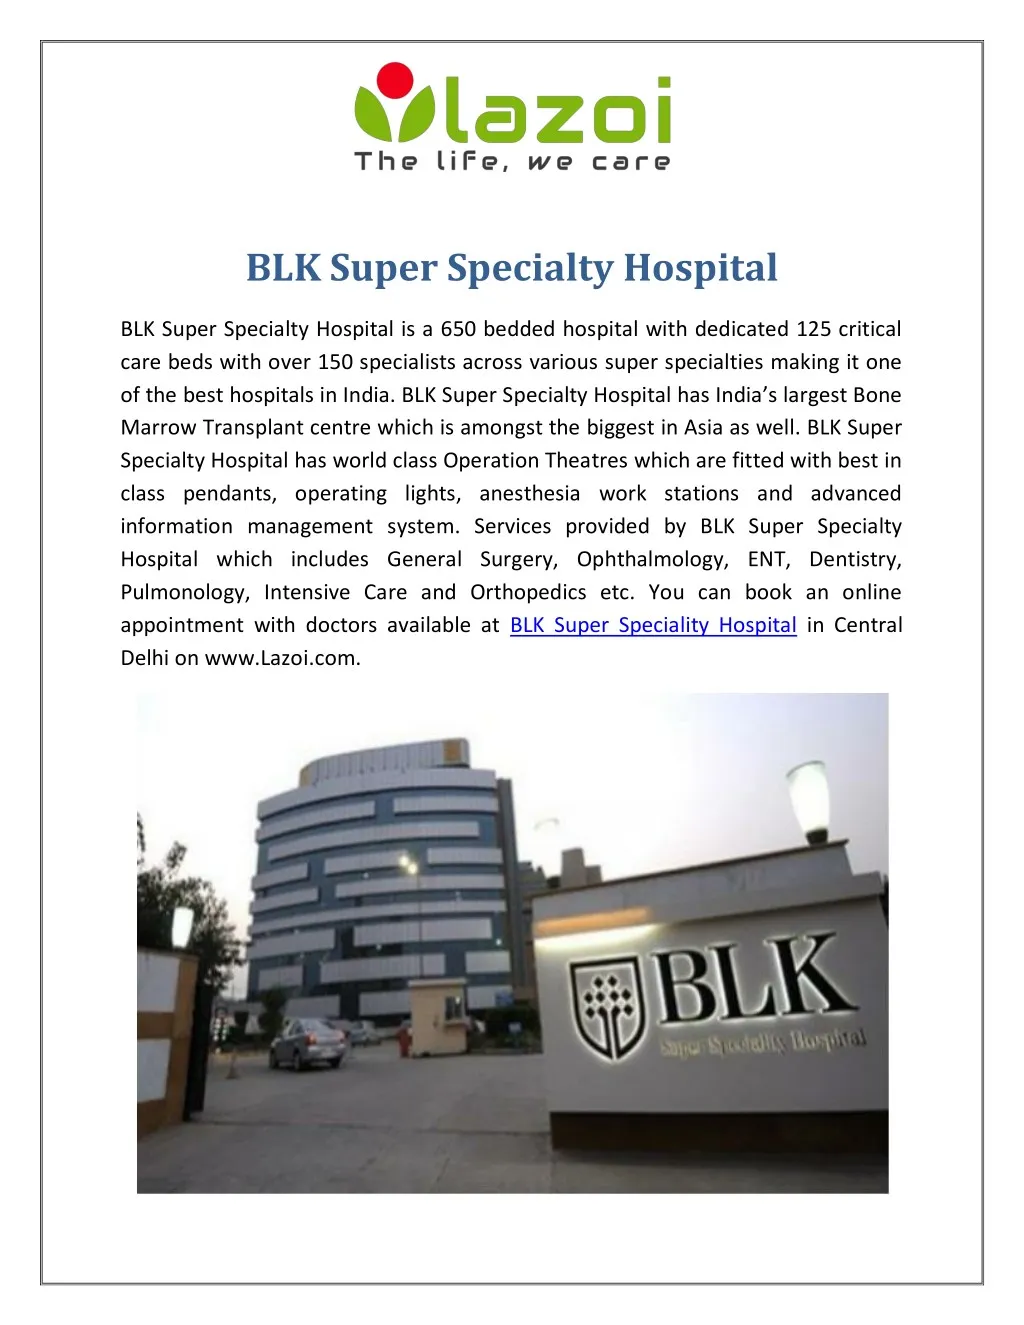 blk super specialty hospital